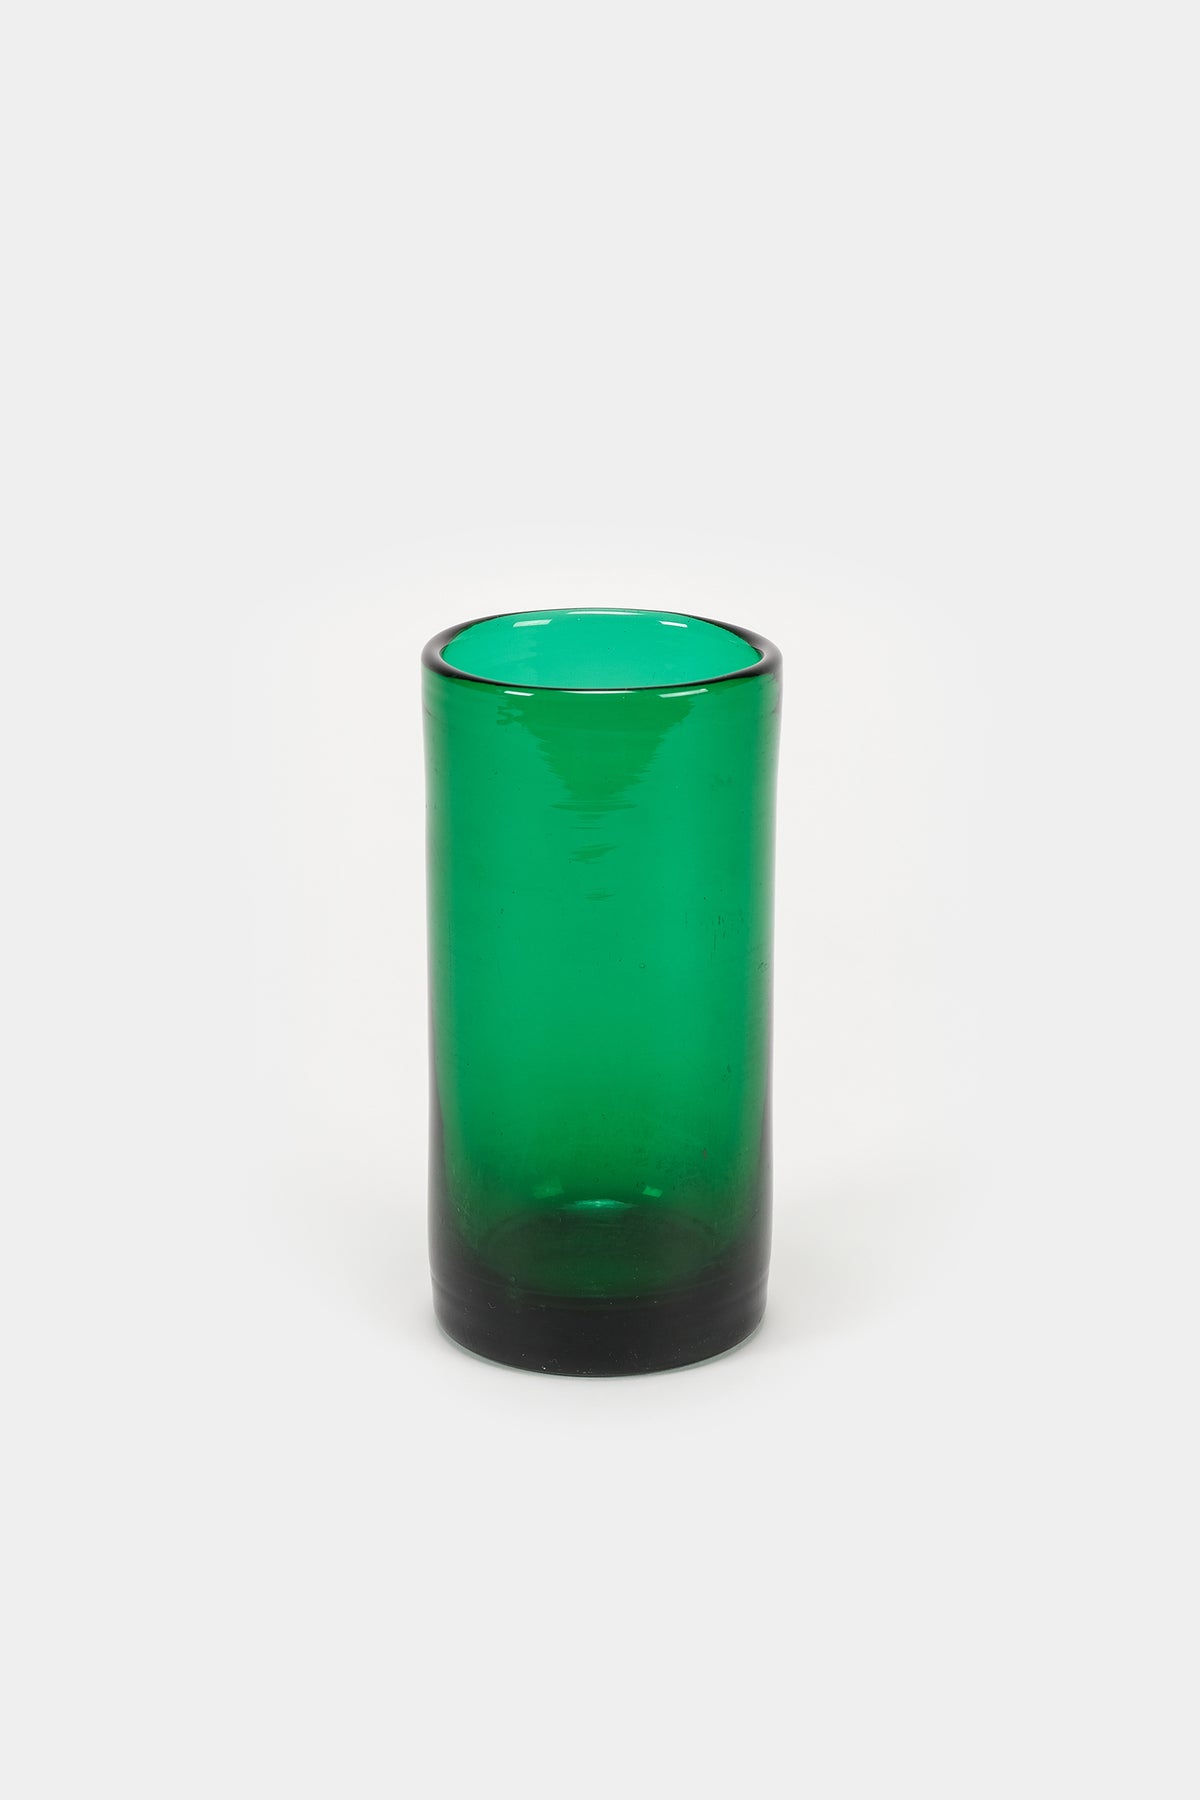 A - Small Vase, Vetro Verde d'Empoli, Italy, 50s